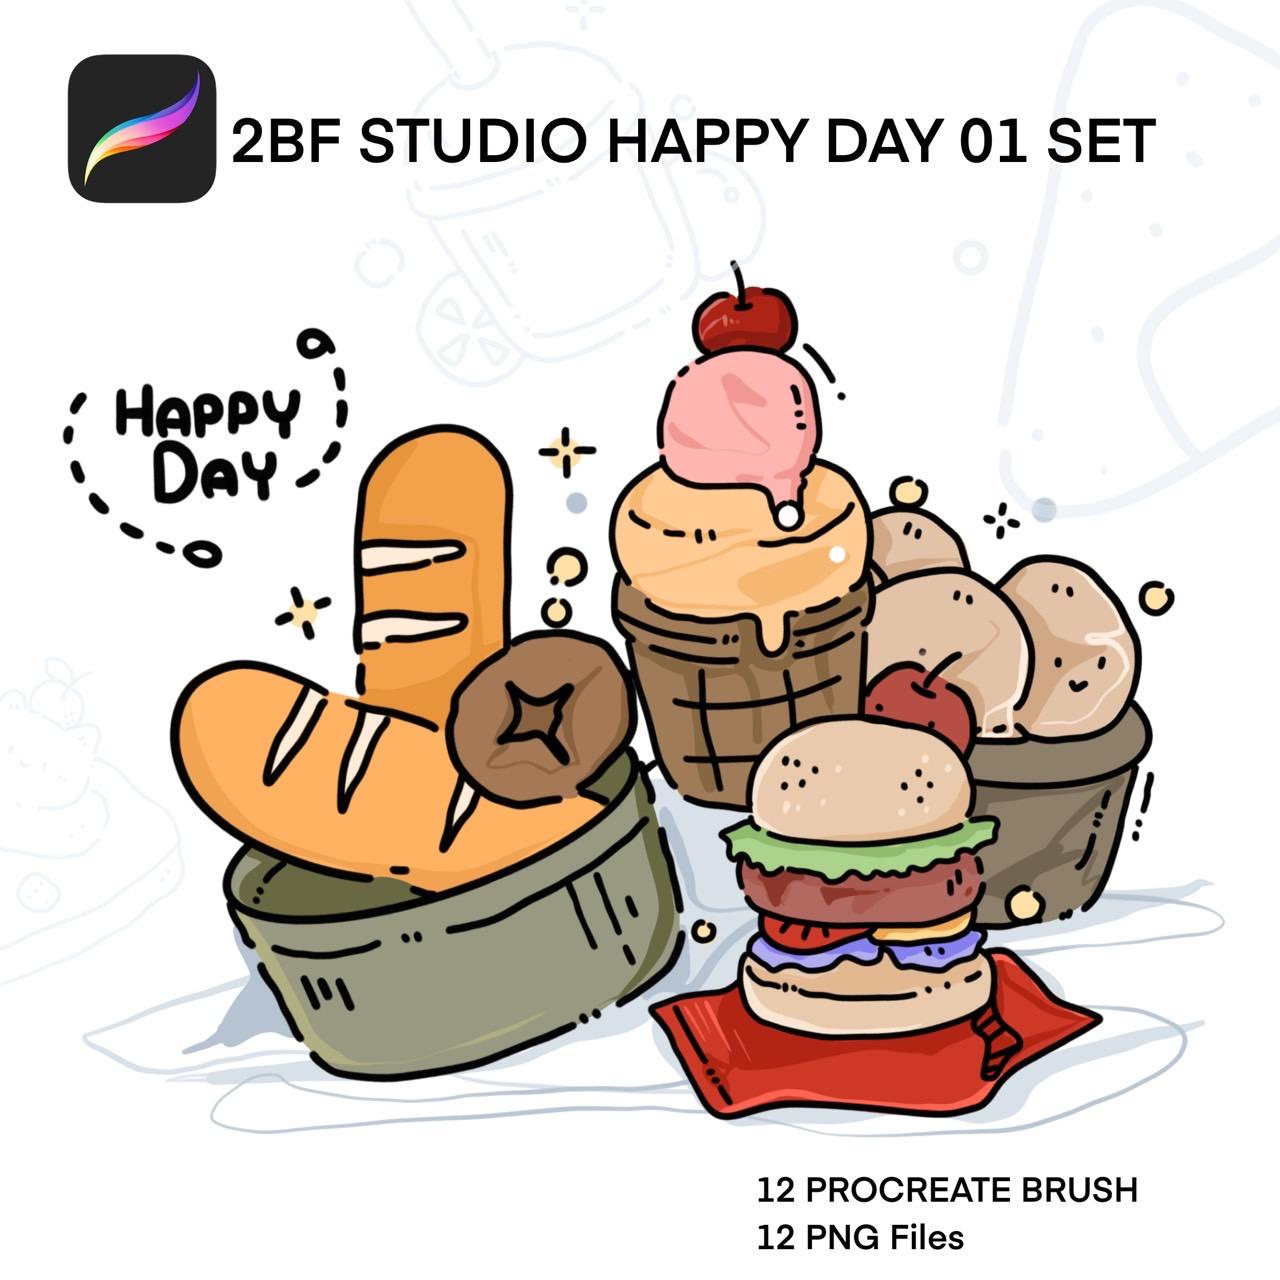 2BF STUDIO HAPPY DAY 01 SET